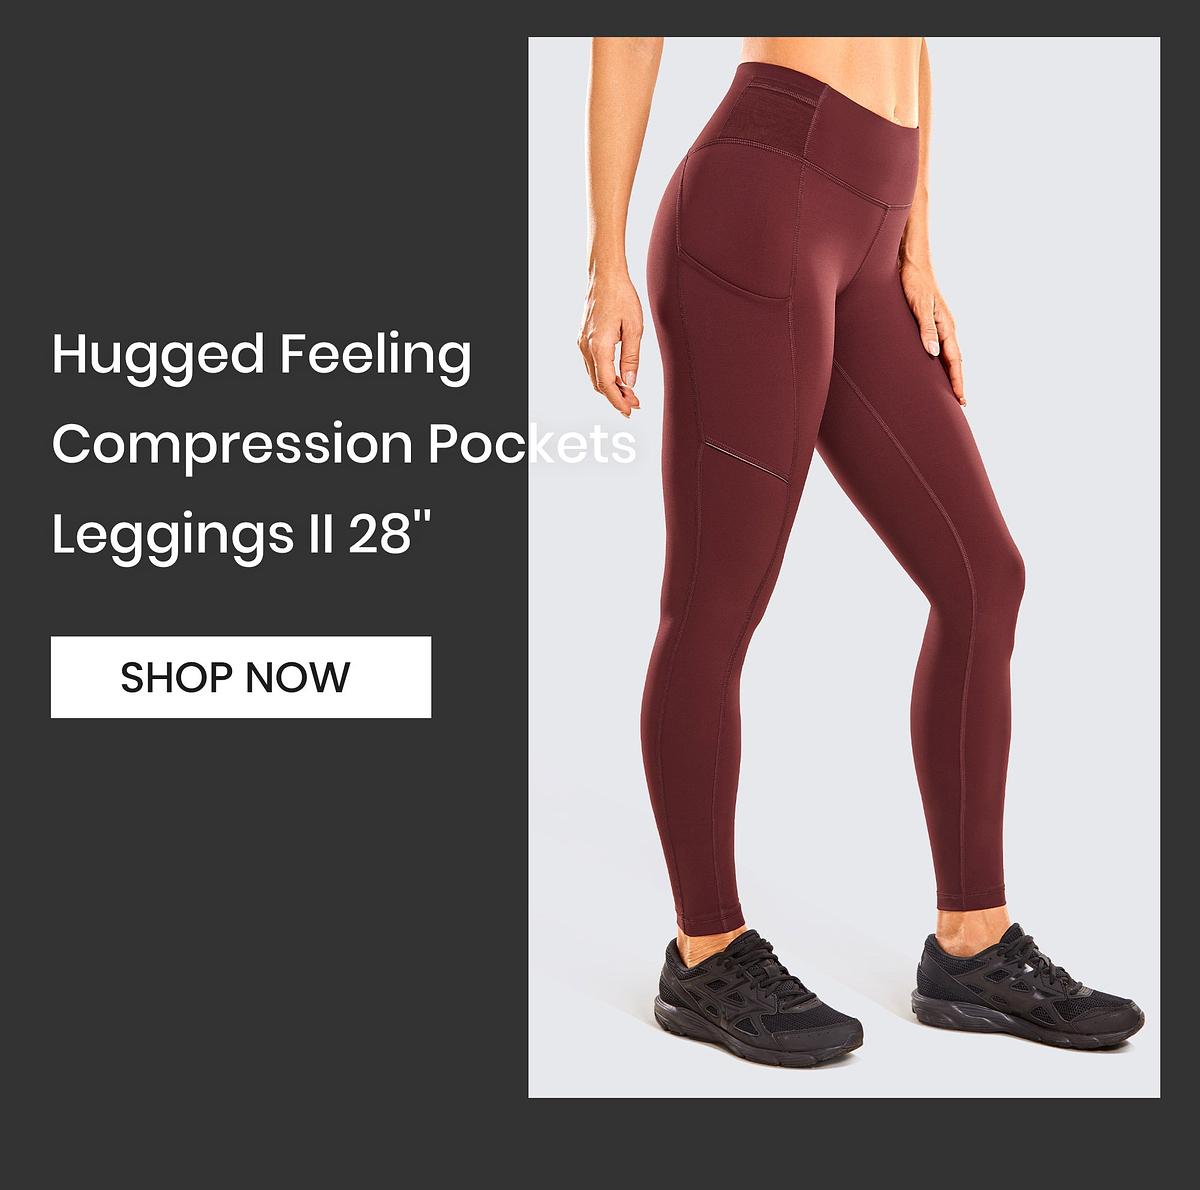 CRZ YOGA Women's Hugged Feeling Training Leggings 28 Inches